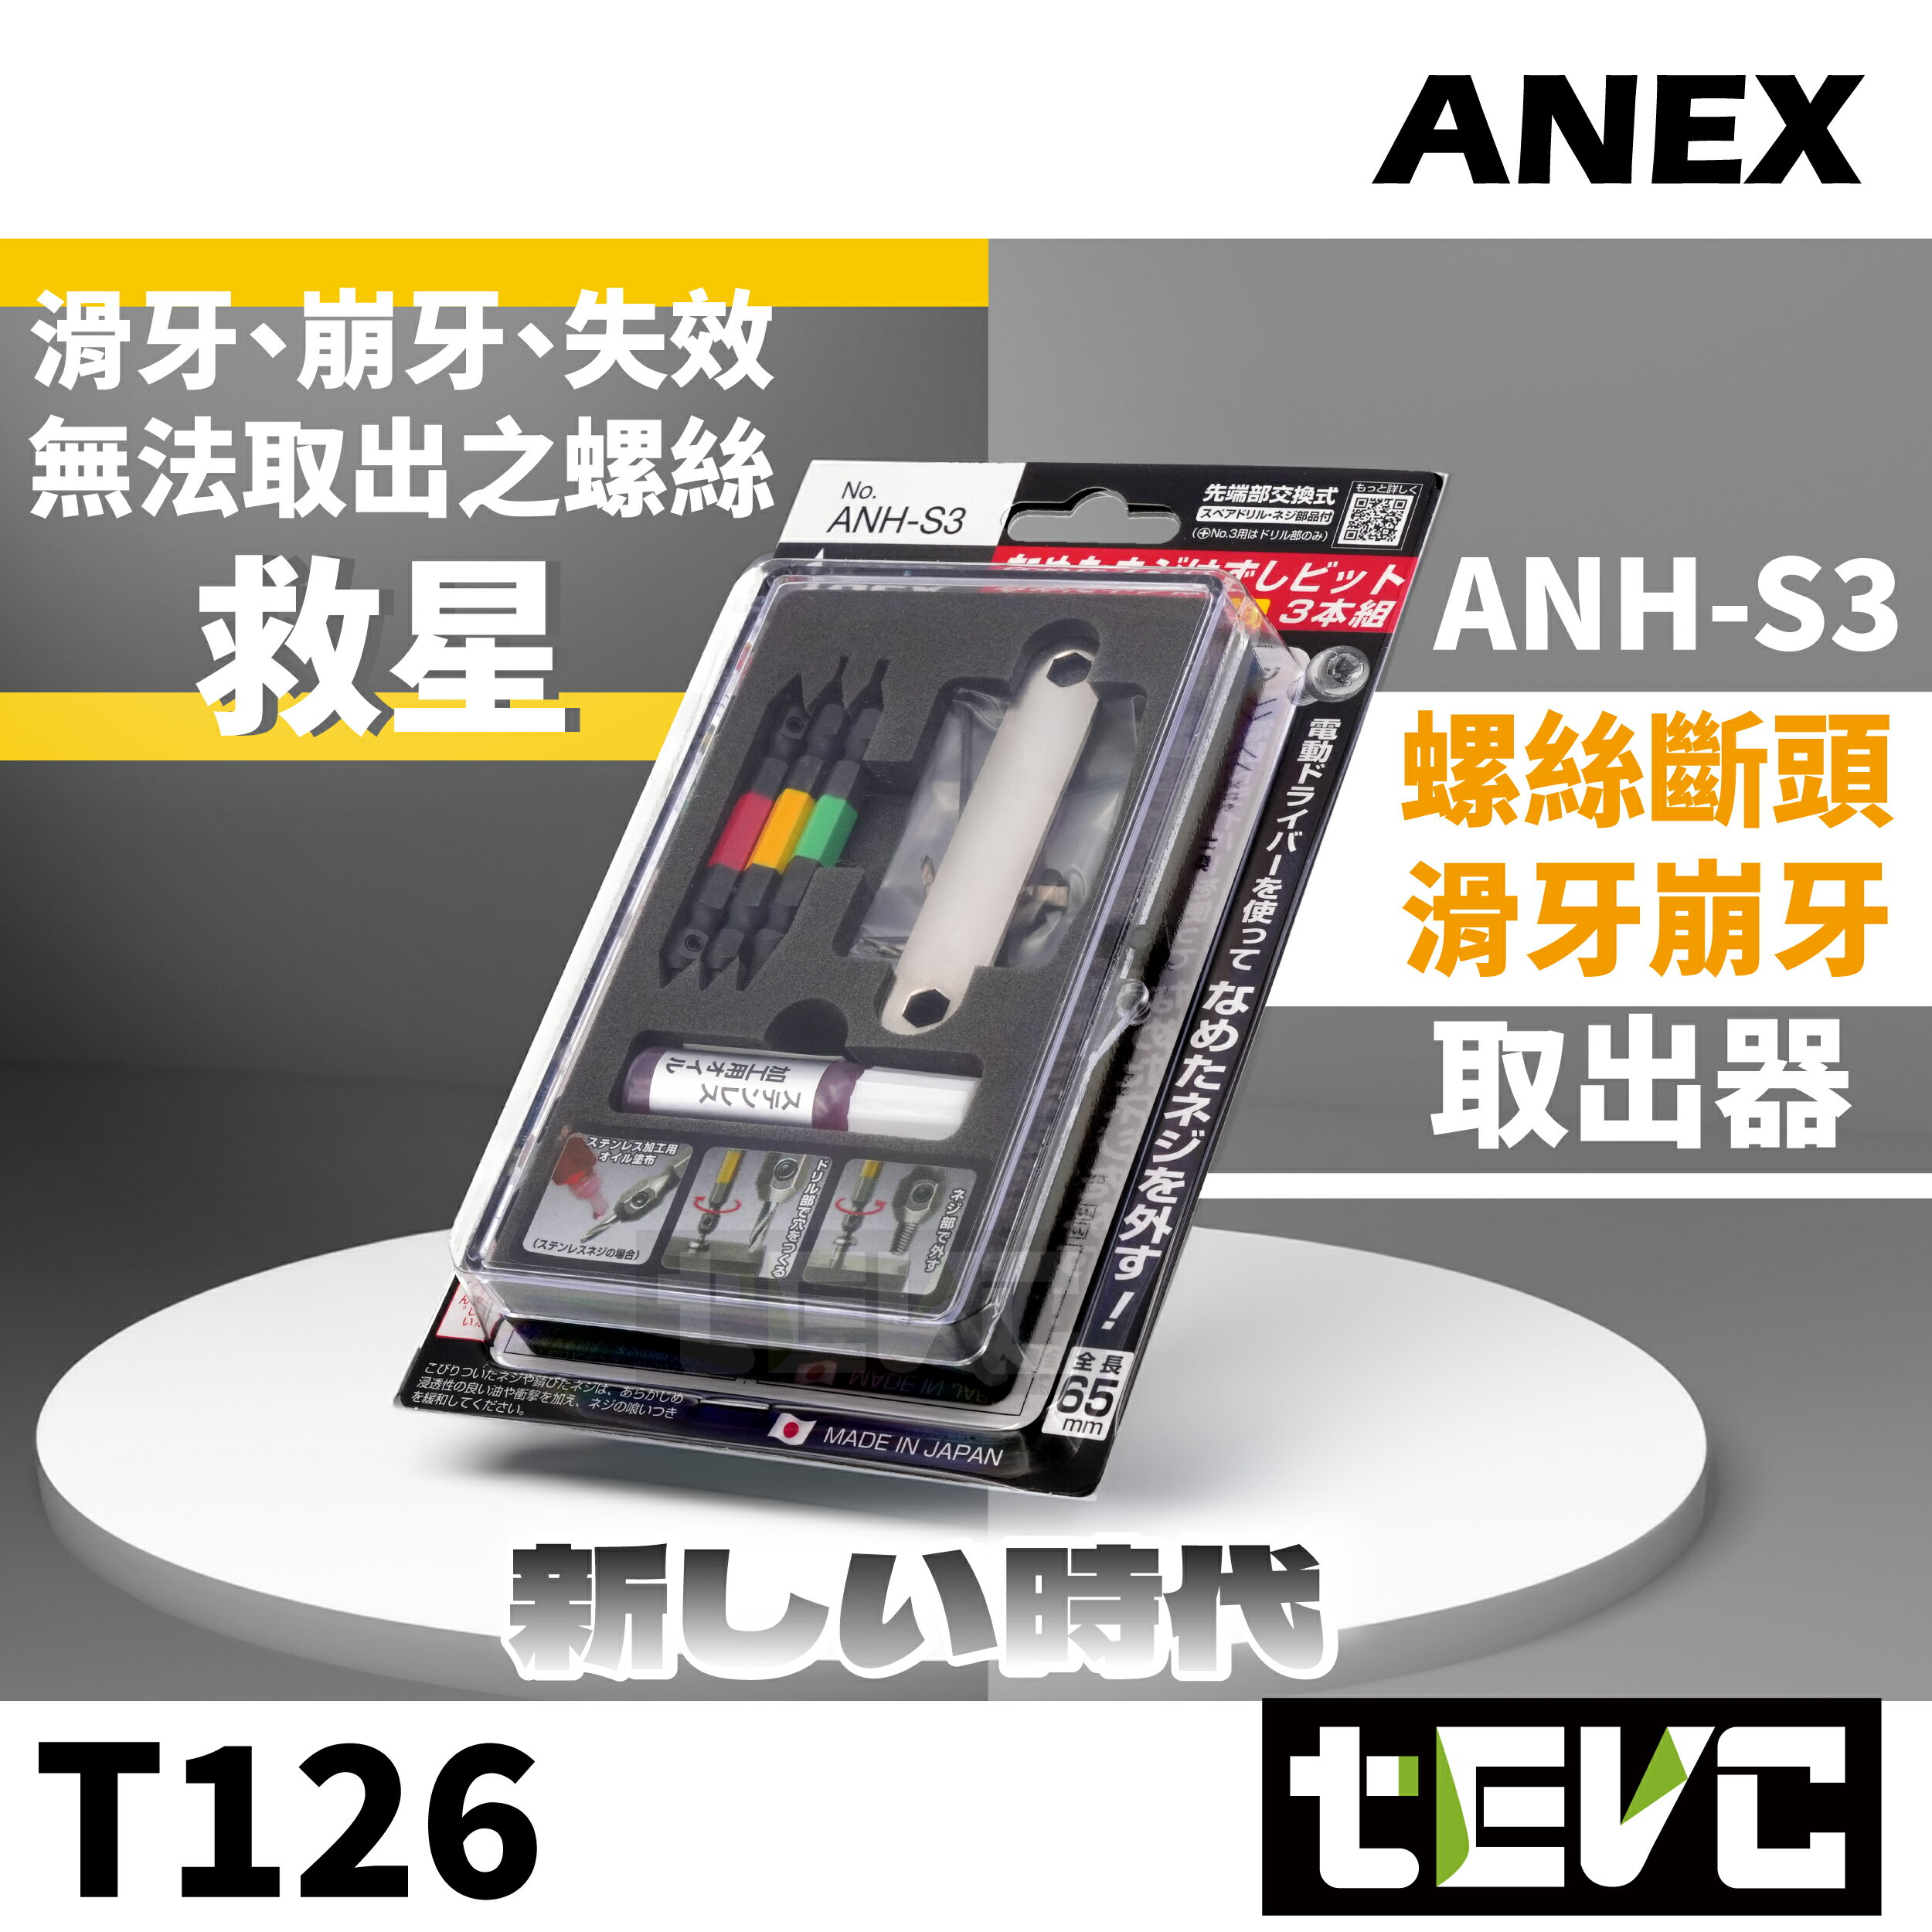 《tevc》日本製 ANEX 斷頭螺絲取出器 滑牙 崩牙 最終手段 救星 ANH-S3 3支組 螺絲頭 反牙螺絲攻 牙攻